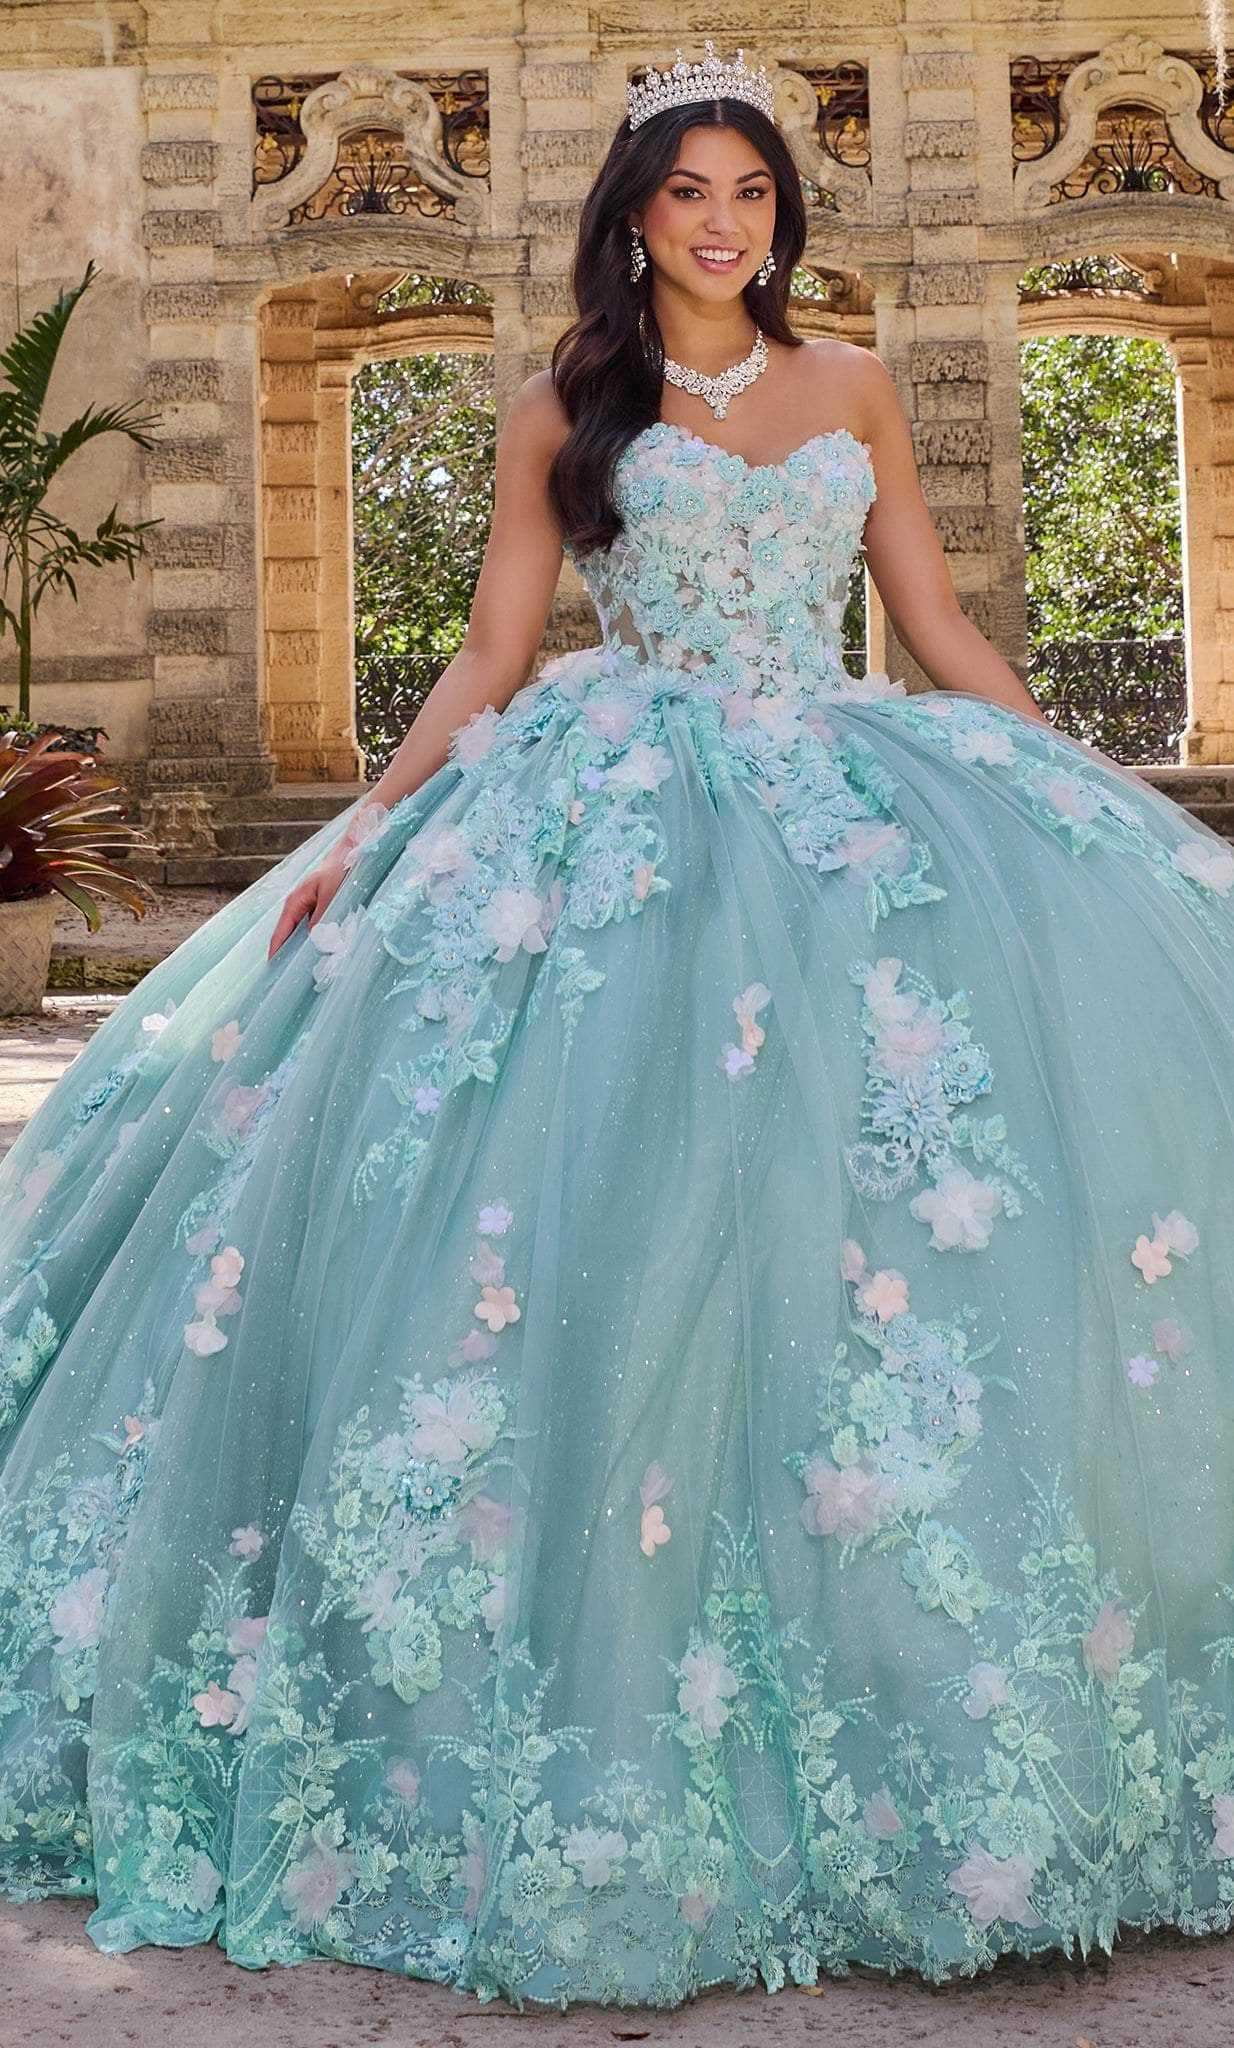 Princesa by Ariana Vara, Princesa by Ariana Vara PR30133 - Strapless Floral-Detailed Volume Gown